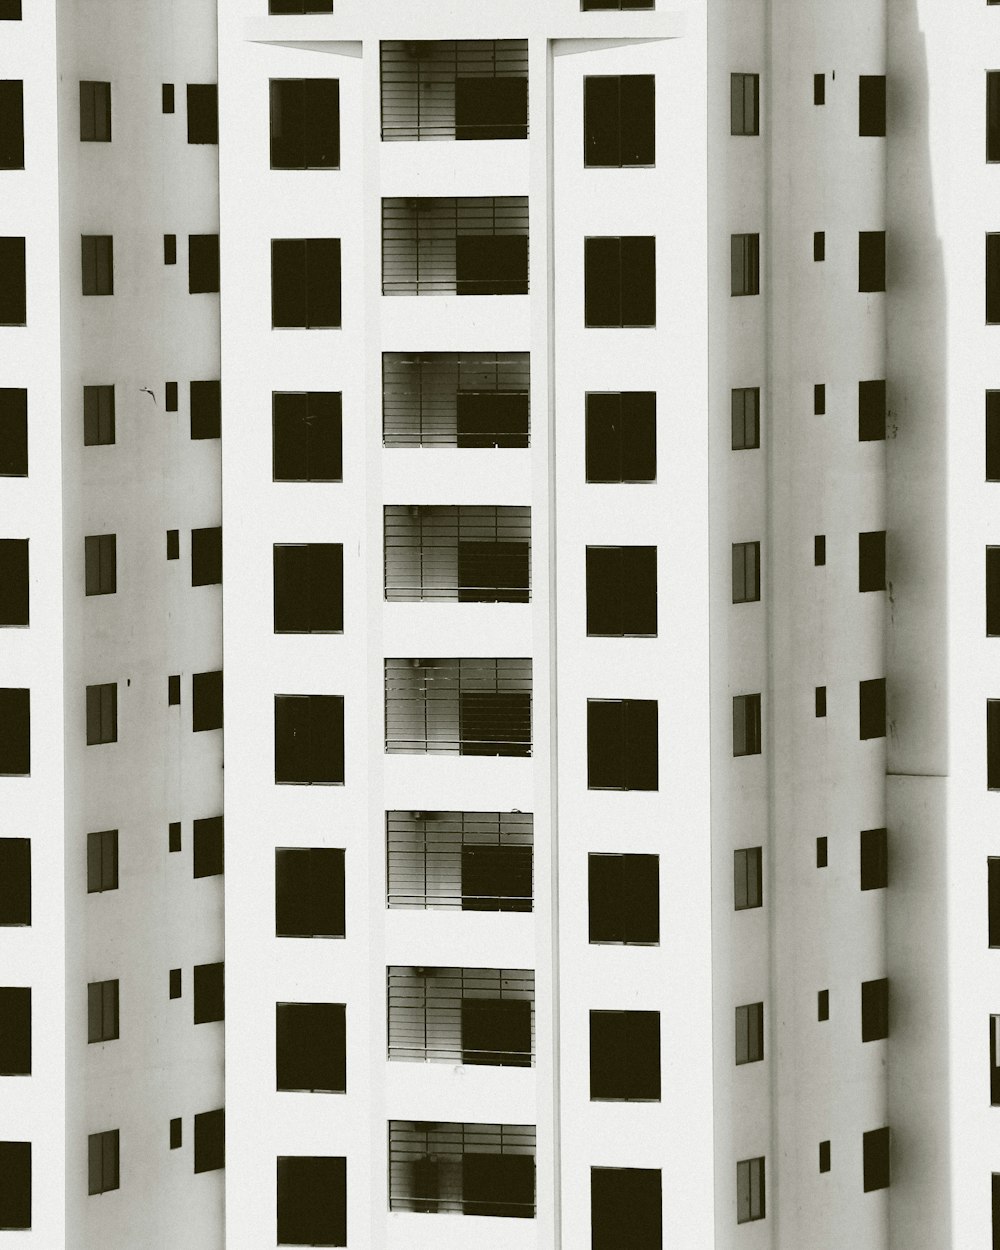 white and black concrete building